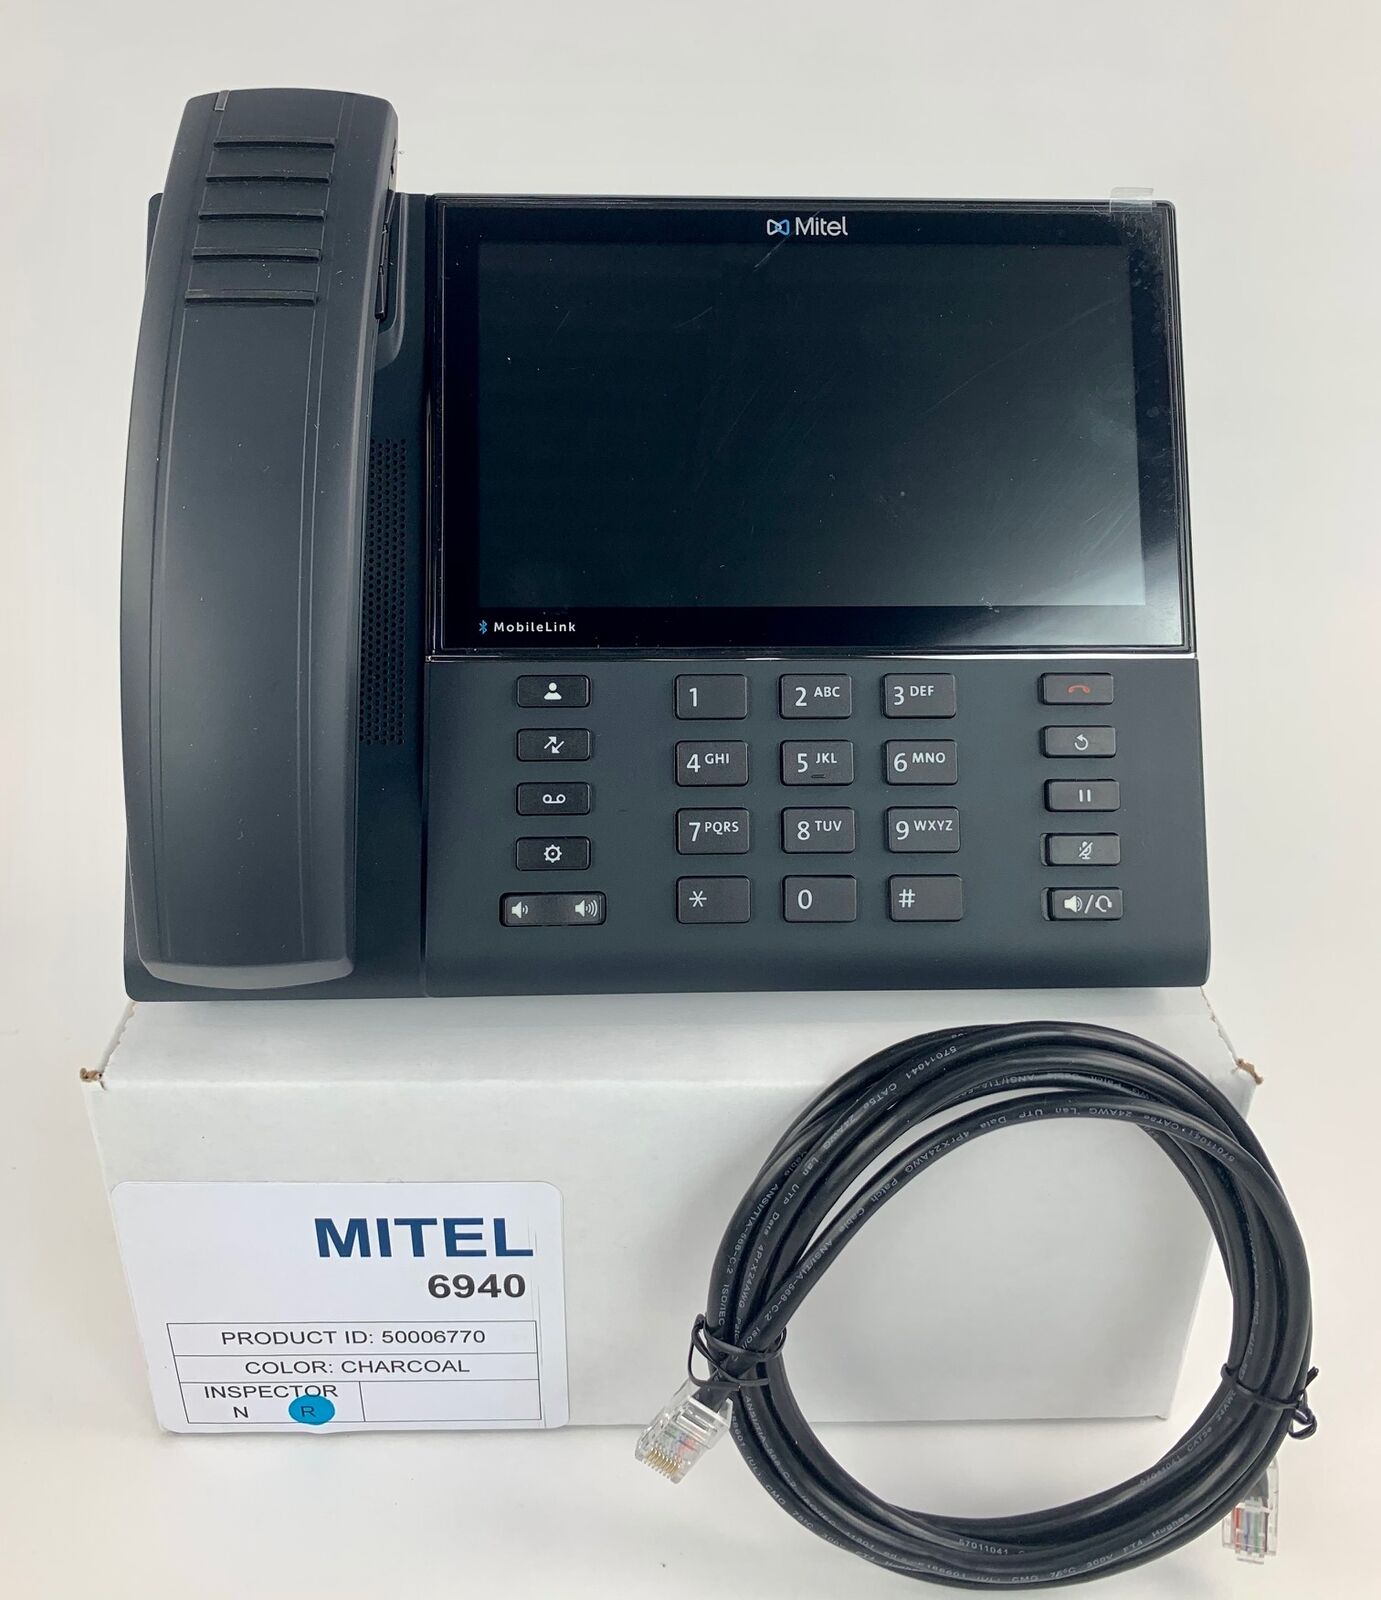 Mitel MiVoice 6940 Gigabit IP Phone 50006770 - with wireless handset Refurbished